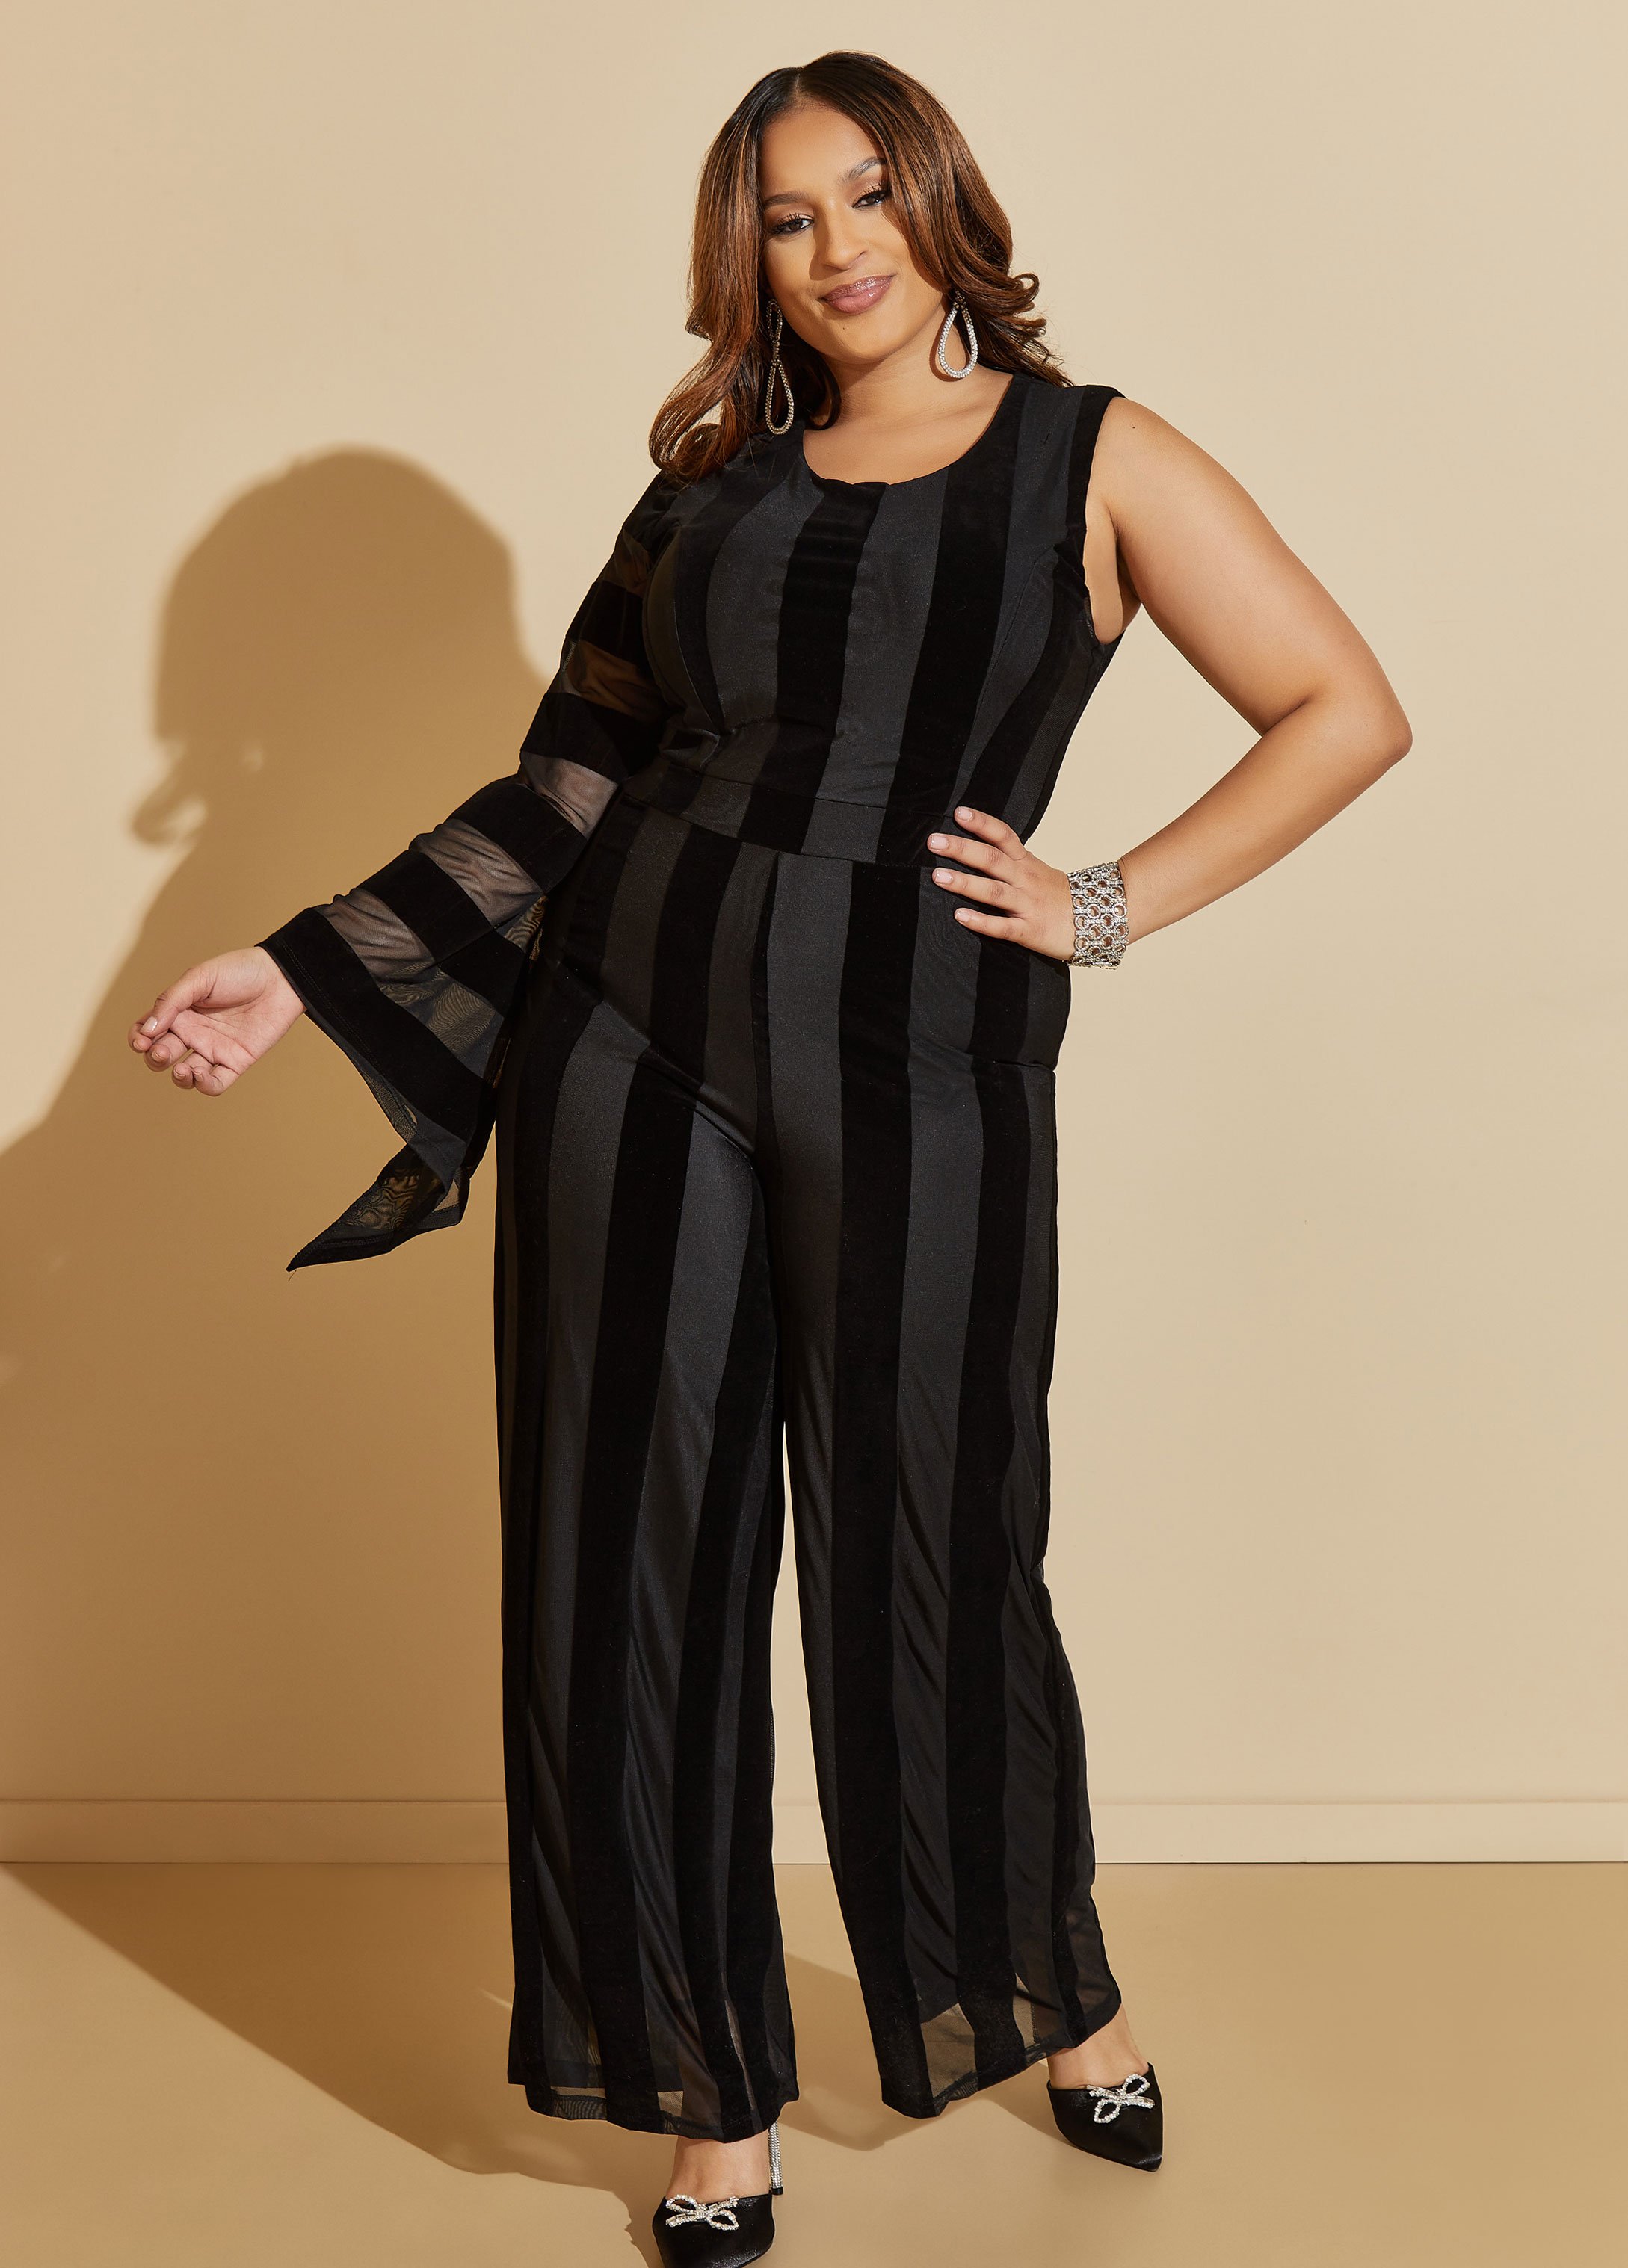 Plus Size One Shoulder Velvet Panel Jumpsuit, BLACK, 34/36 - Ashley Stewart